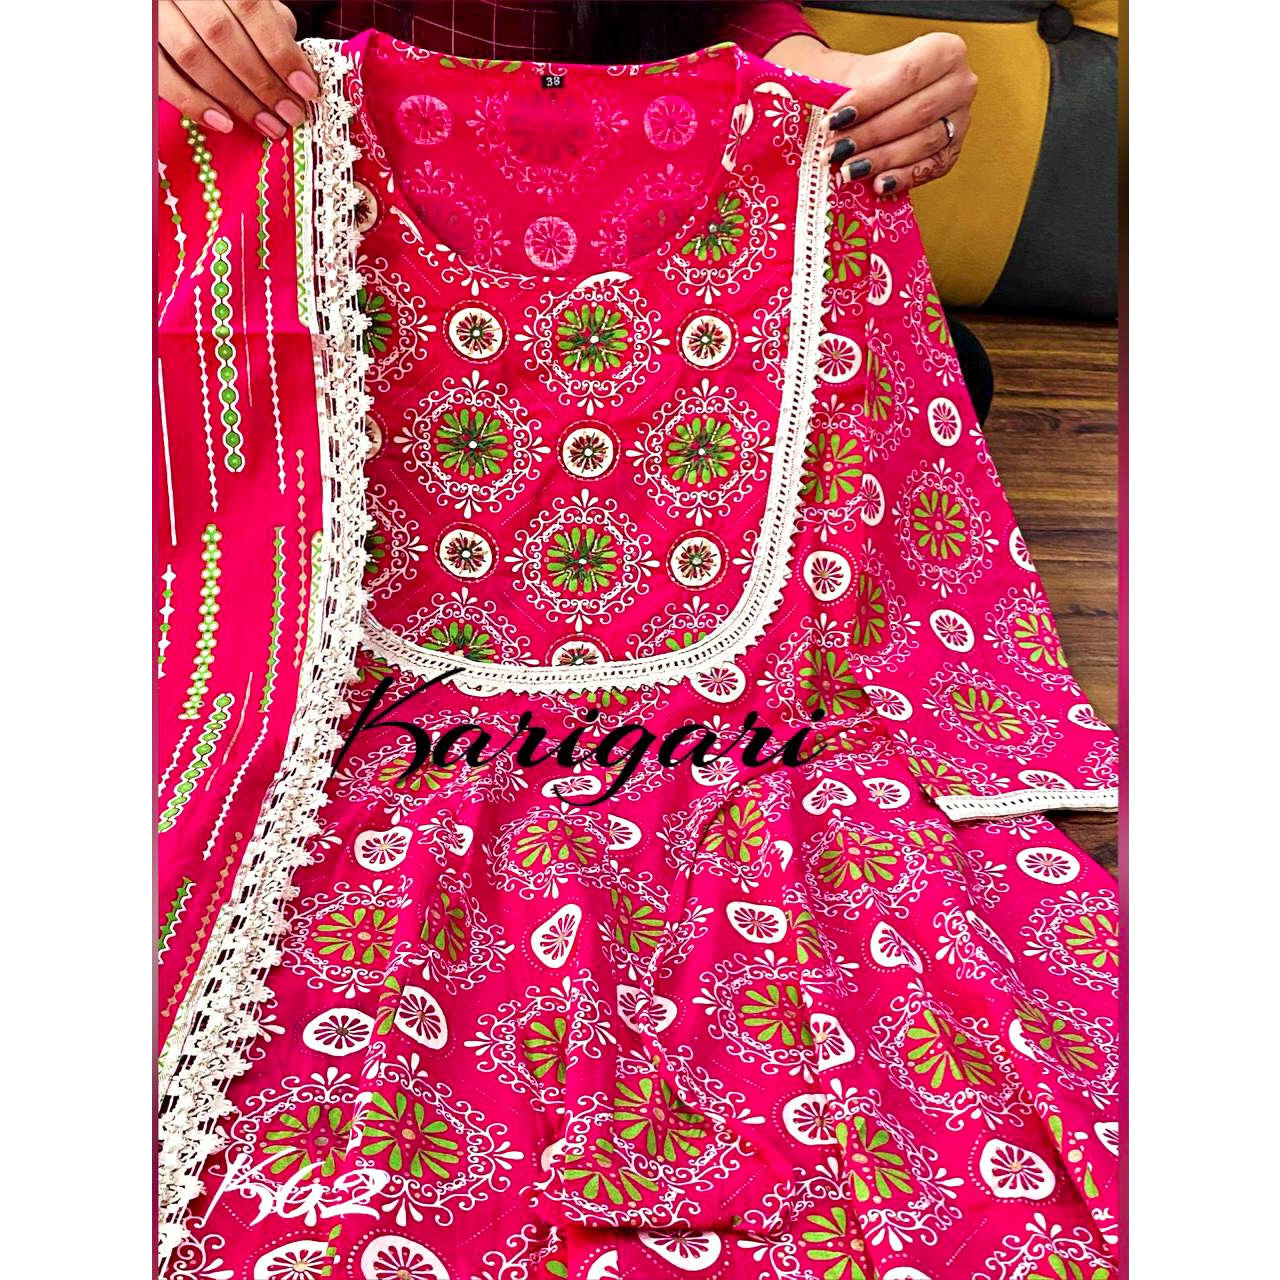 Soft Cotton Anarkali Dress with Pant and Dupatta - Mina Designer Collection